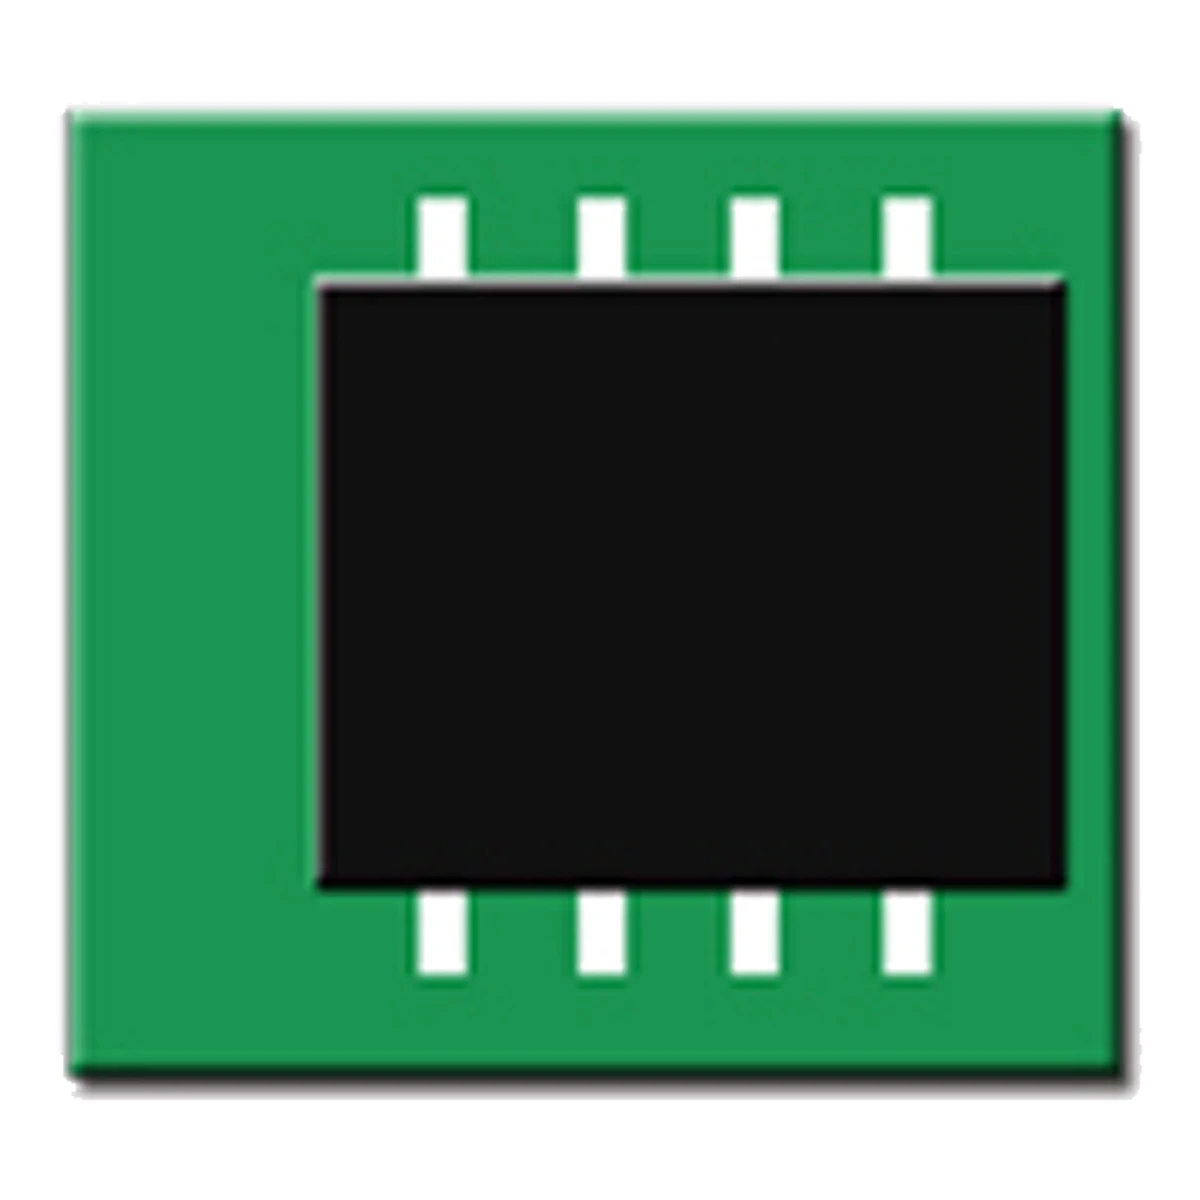 

CF259A CF258A Toner Reset Chip For HP LaserJet Pro M304a M305d M404dn M405n MFP M428dw M428fdw M428fd Printer Toner Cartridge